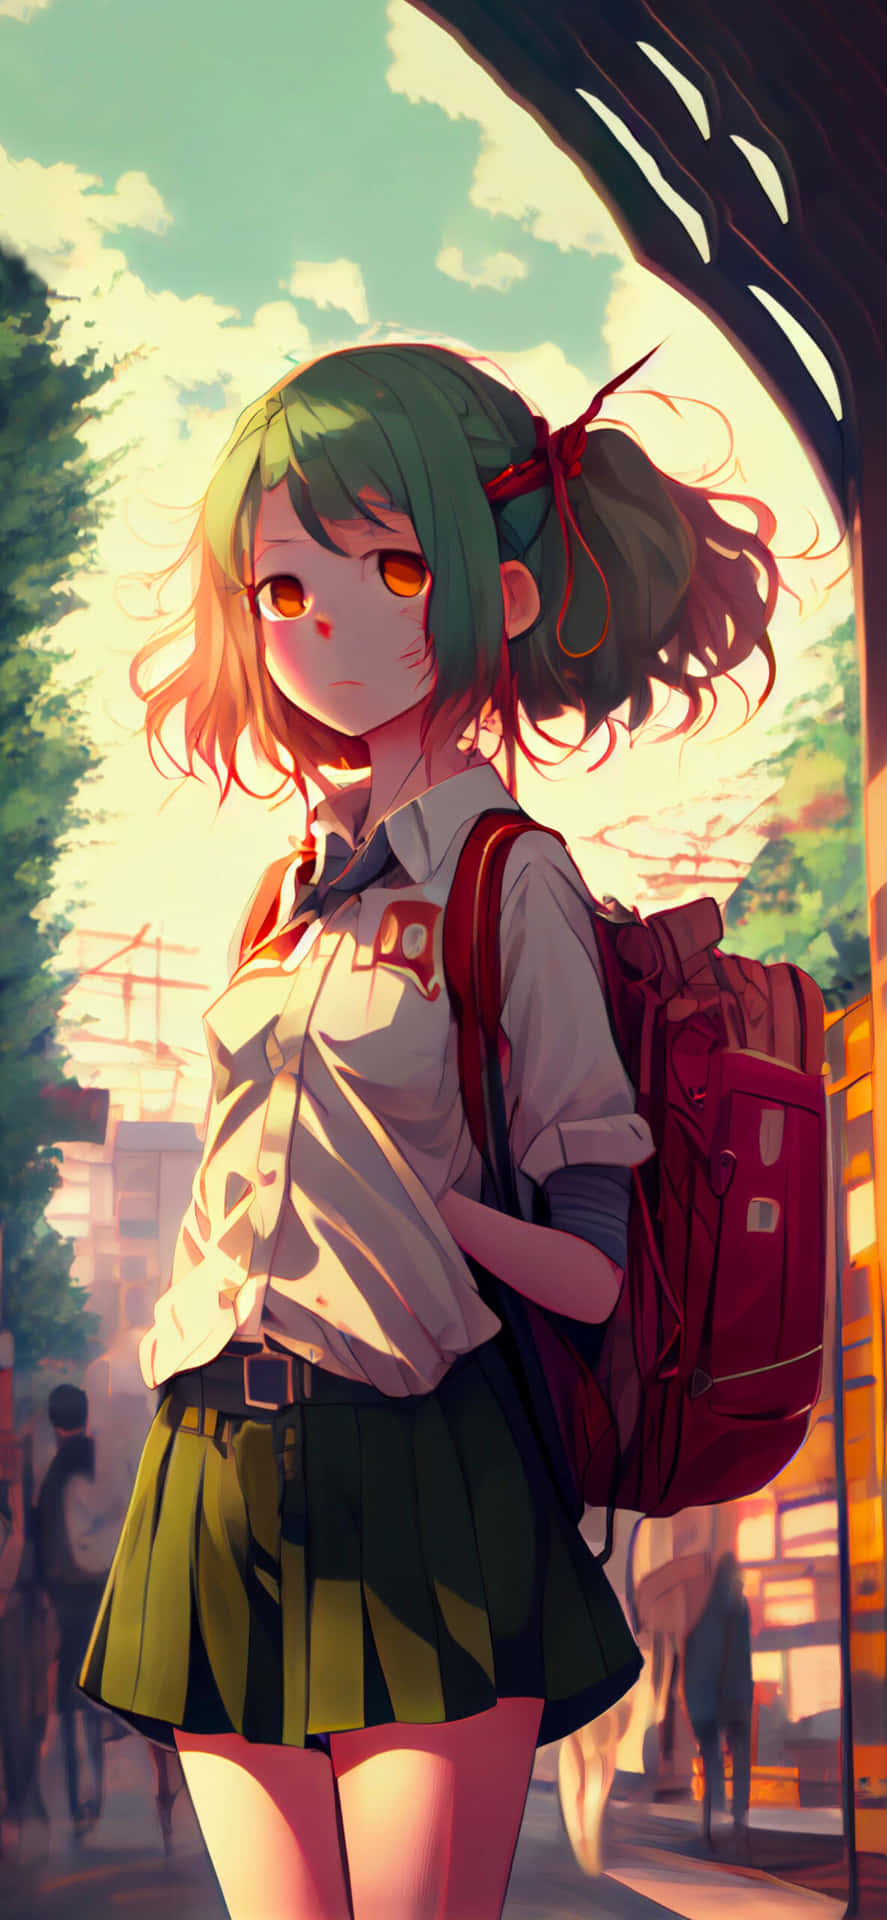 A beautiful Anime Girl with a dreamy, far away look.